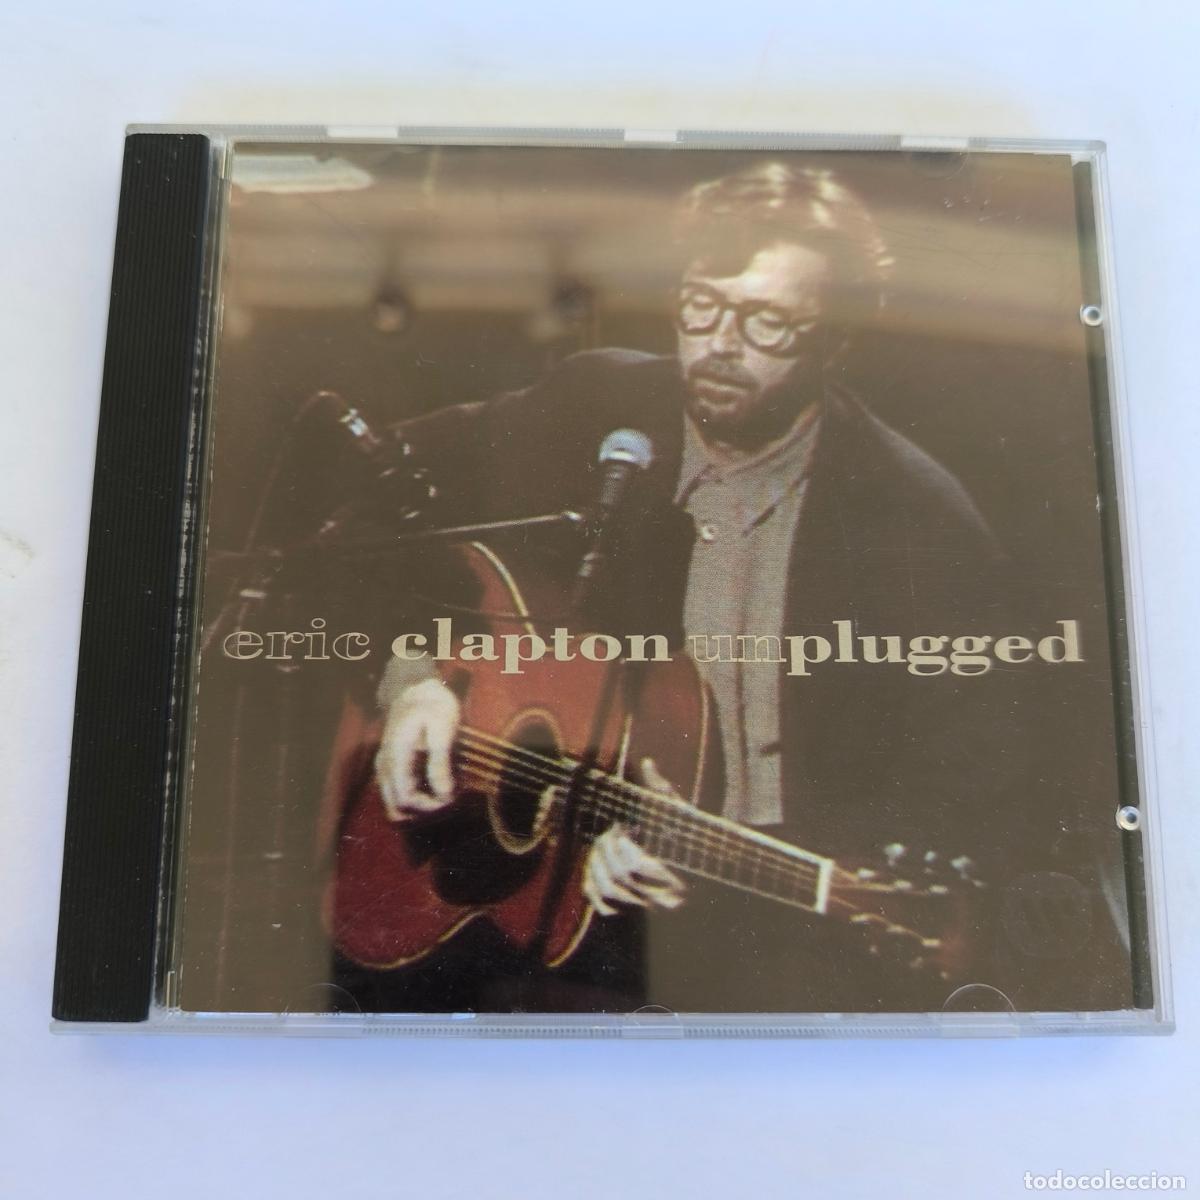 eric clapton - umplugged - cd - Compra venta en todocoleccion